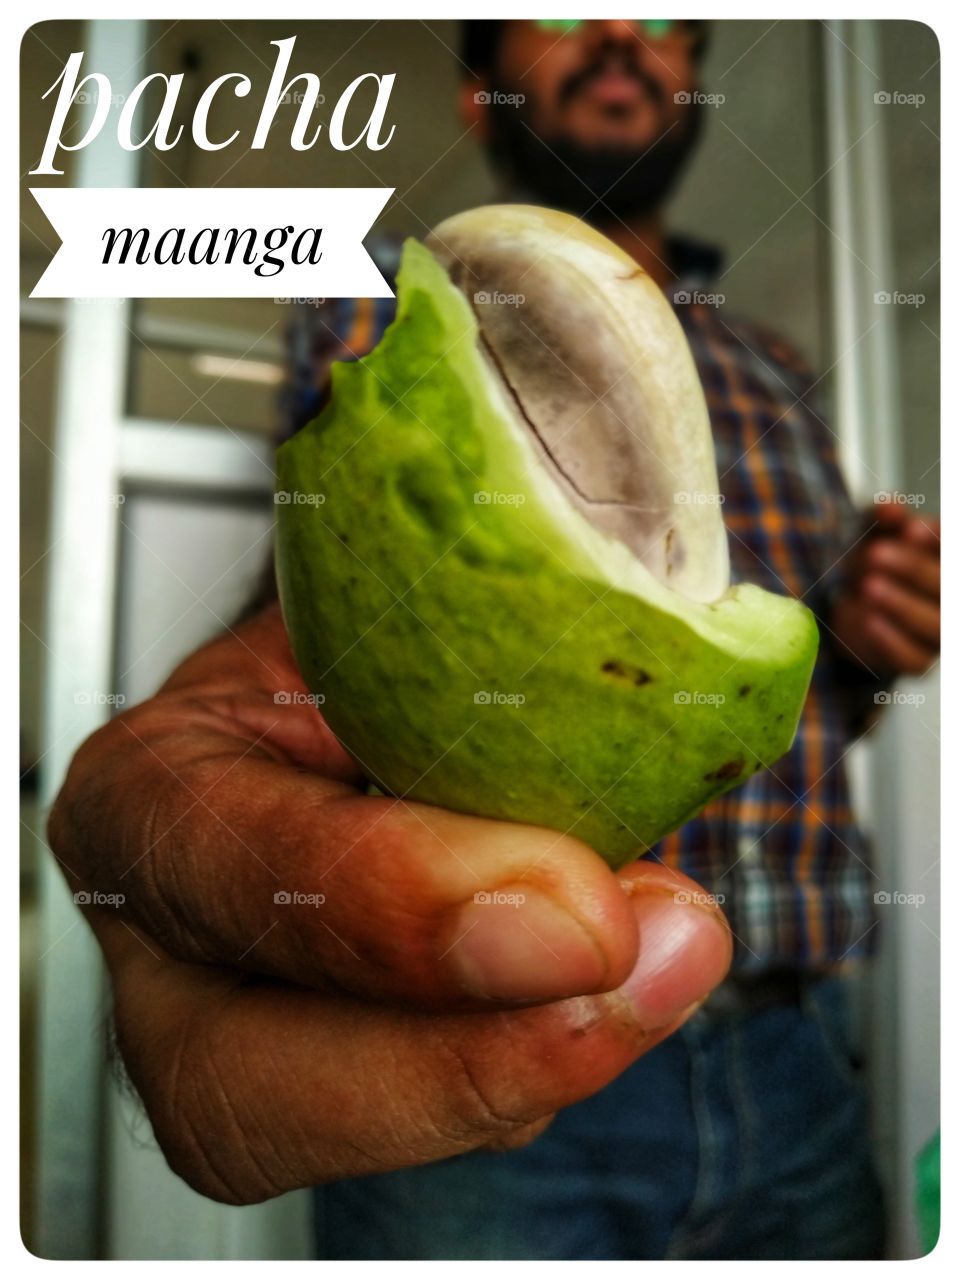 His love for kacha mangoes..